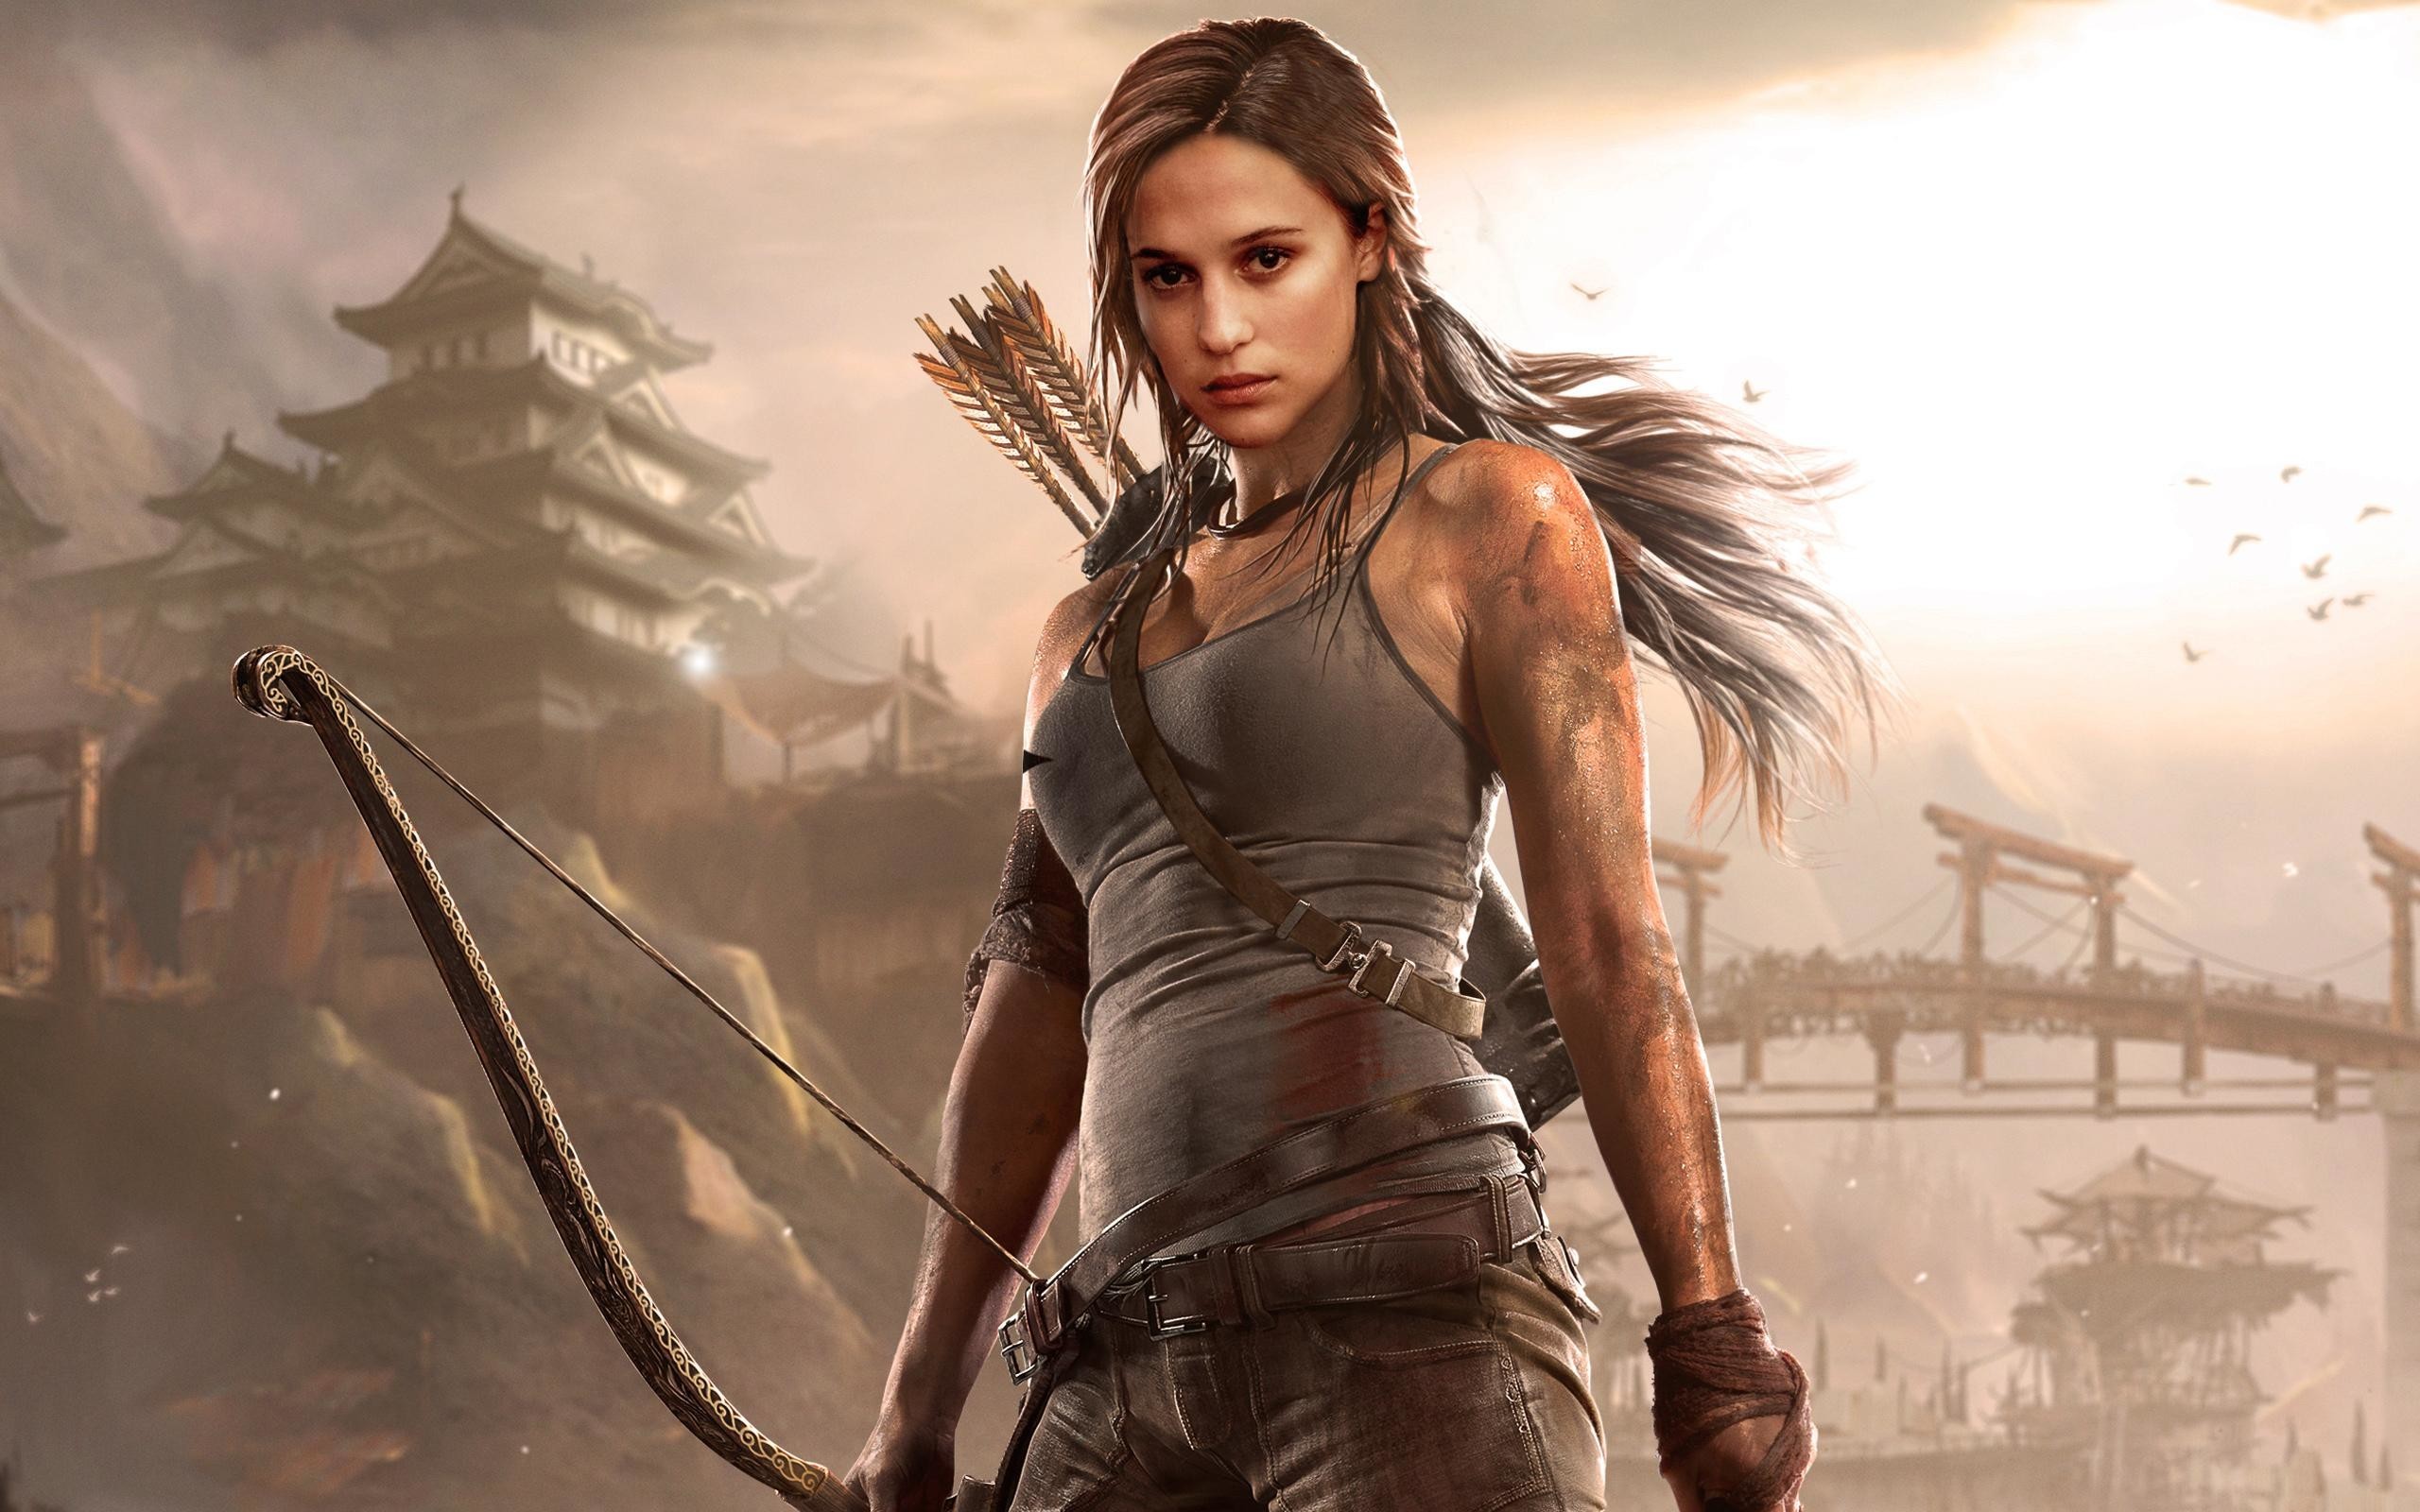 Tomb raider 2018, Lara Croft 4K wallpaper download